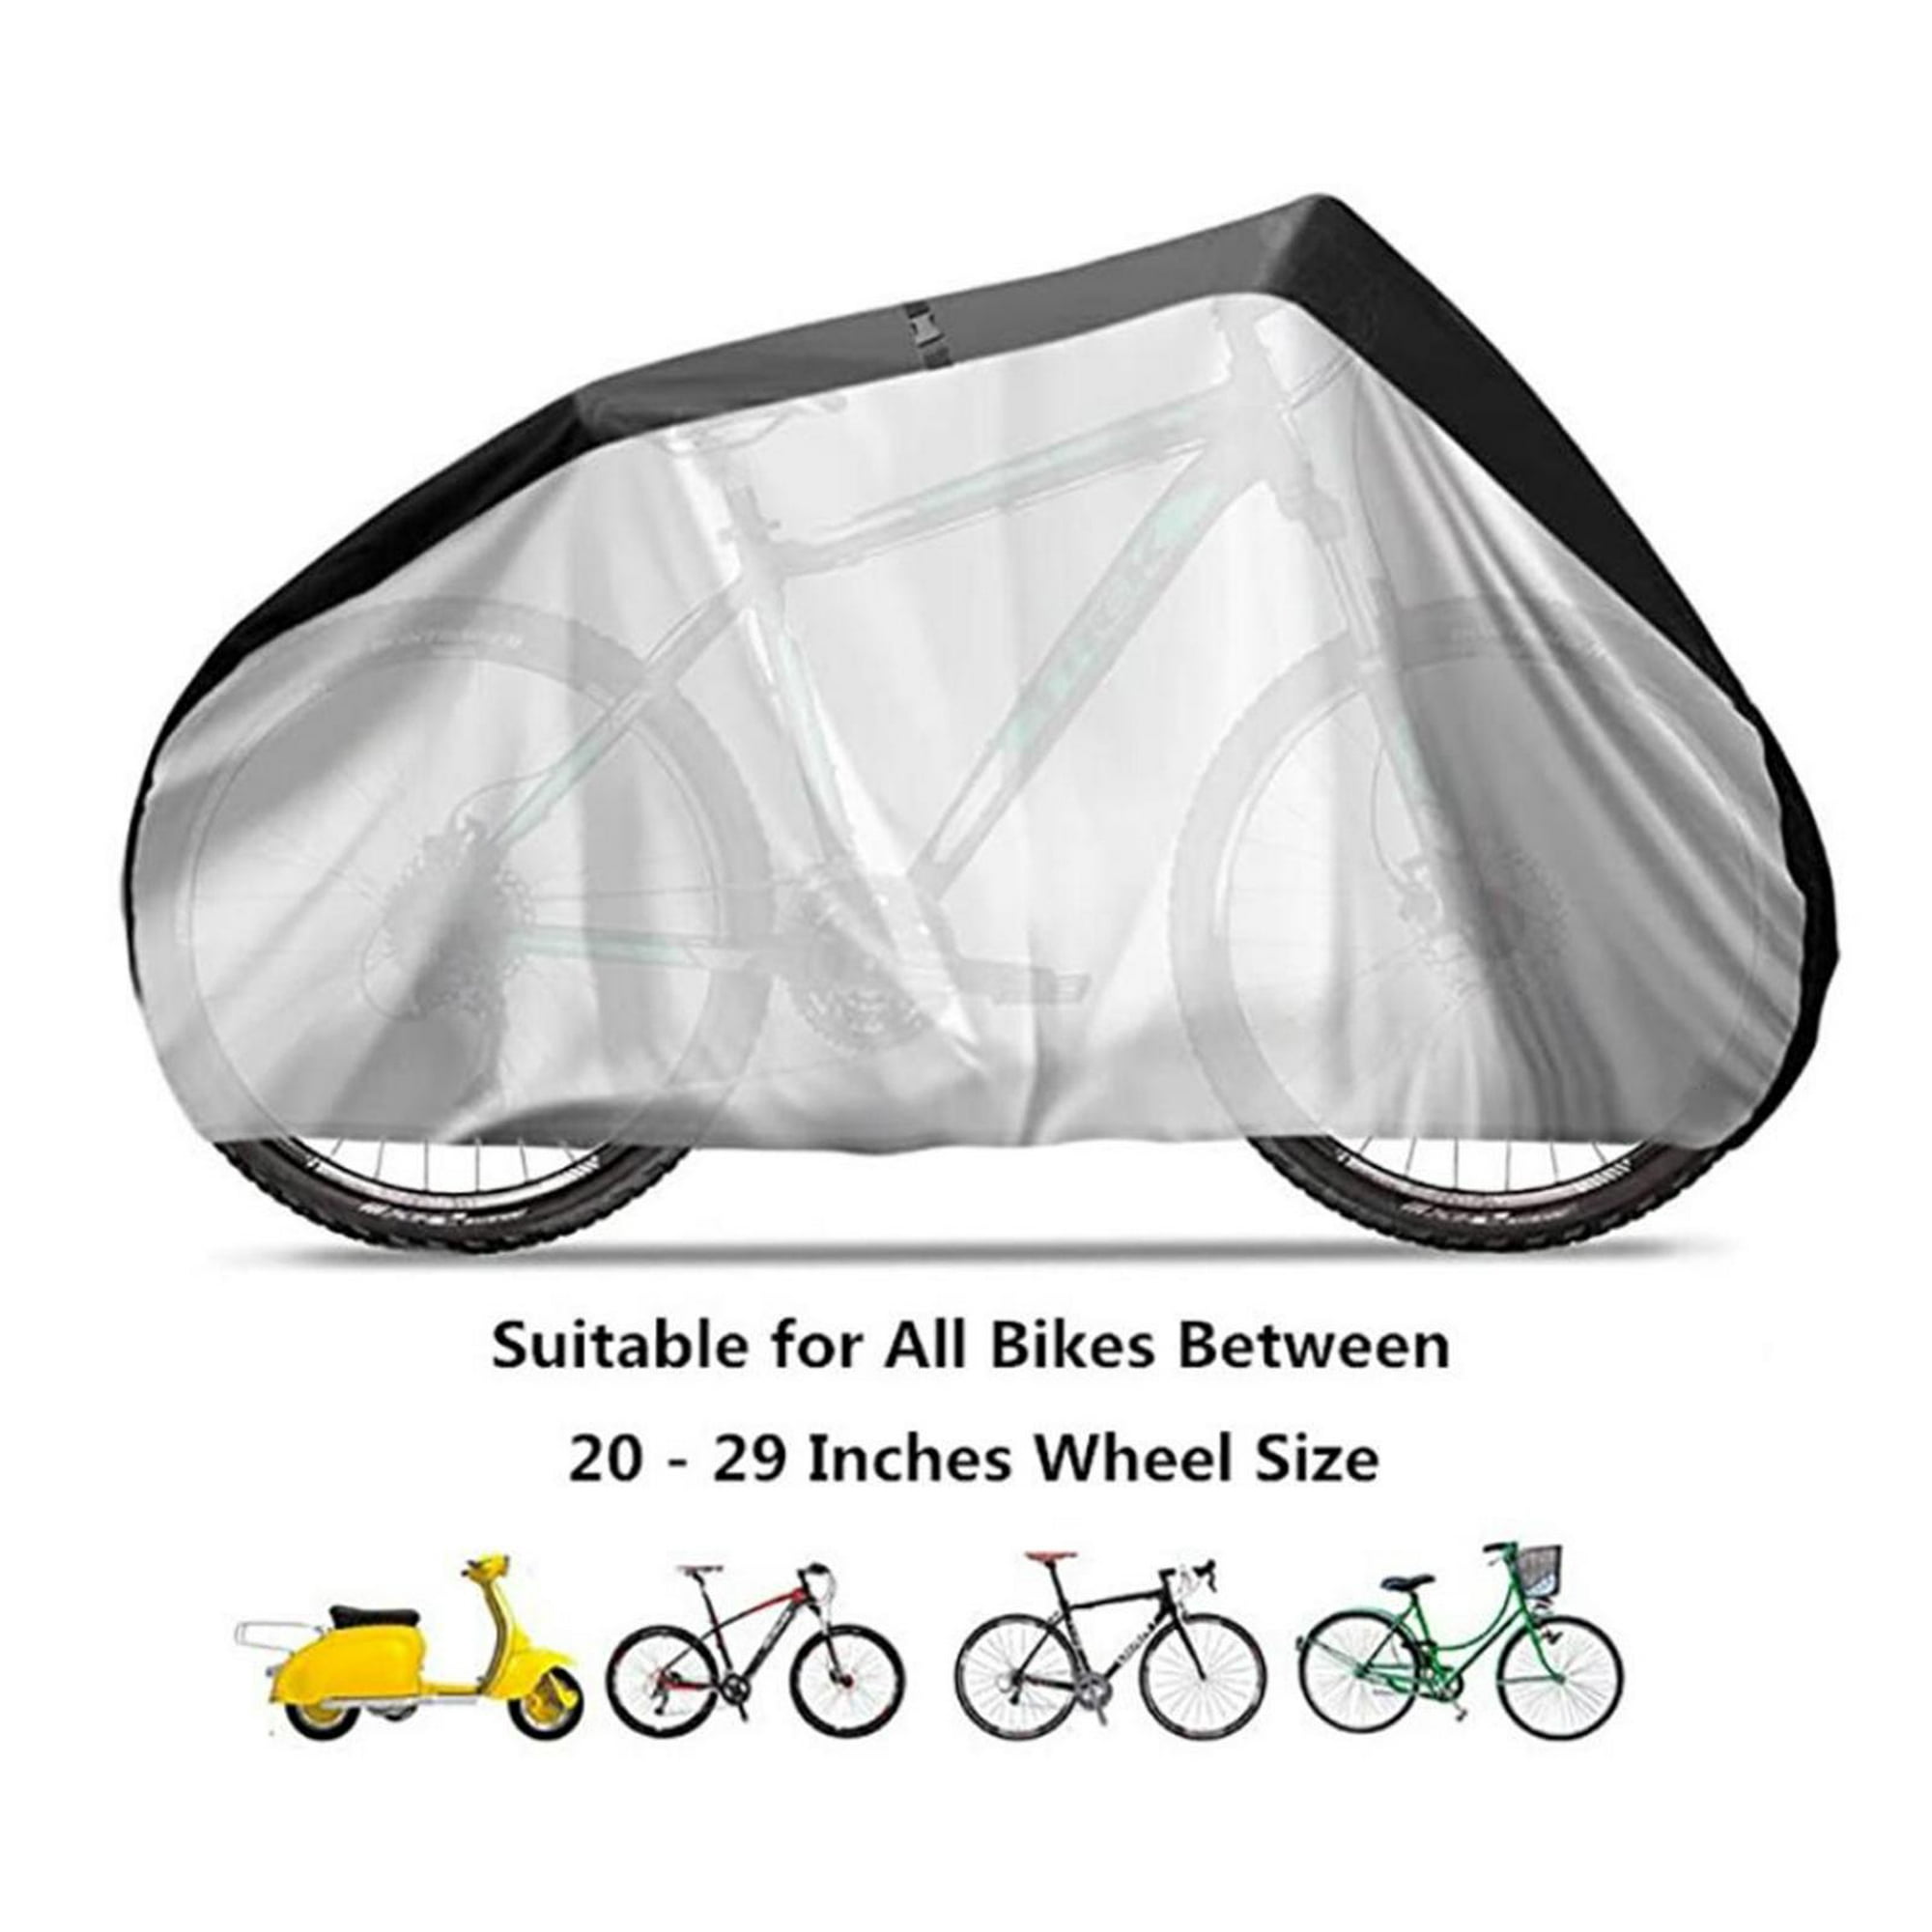 Funda para bicicleta, impermeable para almacenamiento de bicicletas al aire  libre para 1, 2 o 3 bicicletas. Material resistente Ripstop. 2 tipos